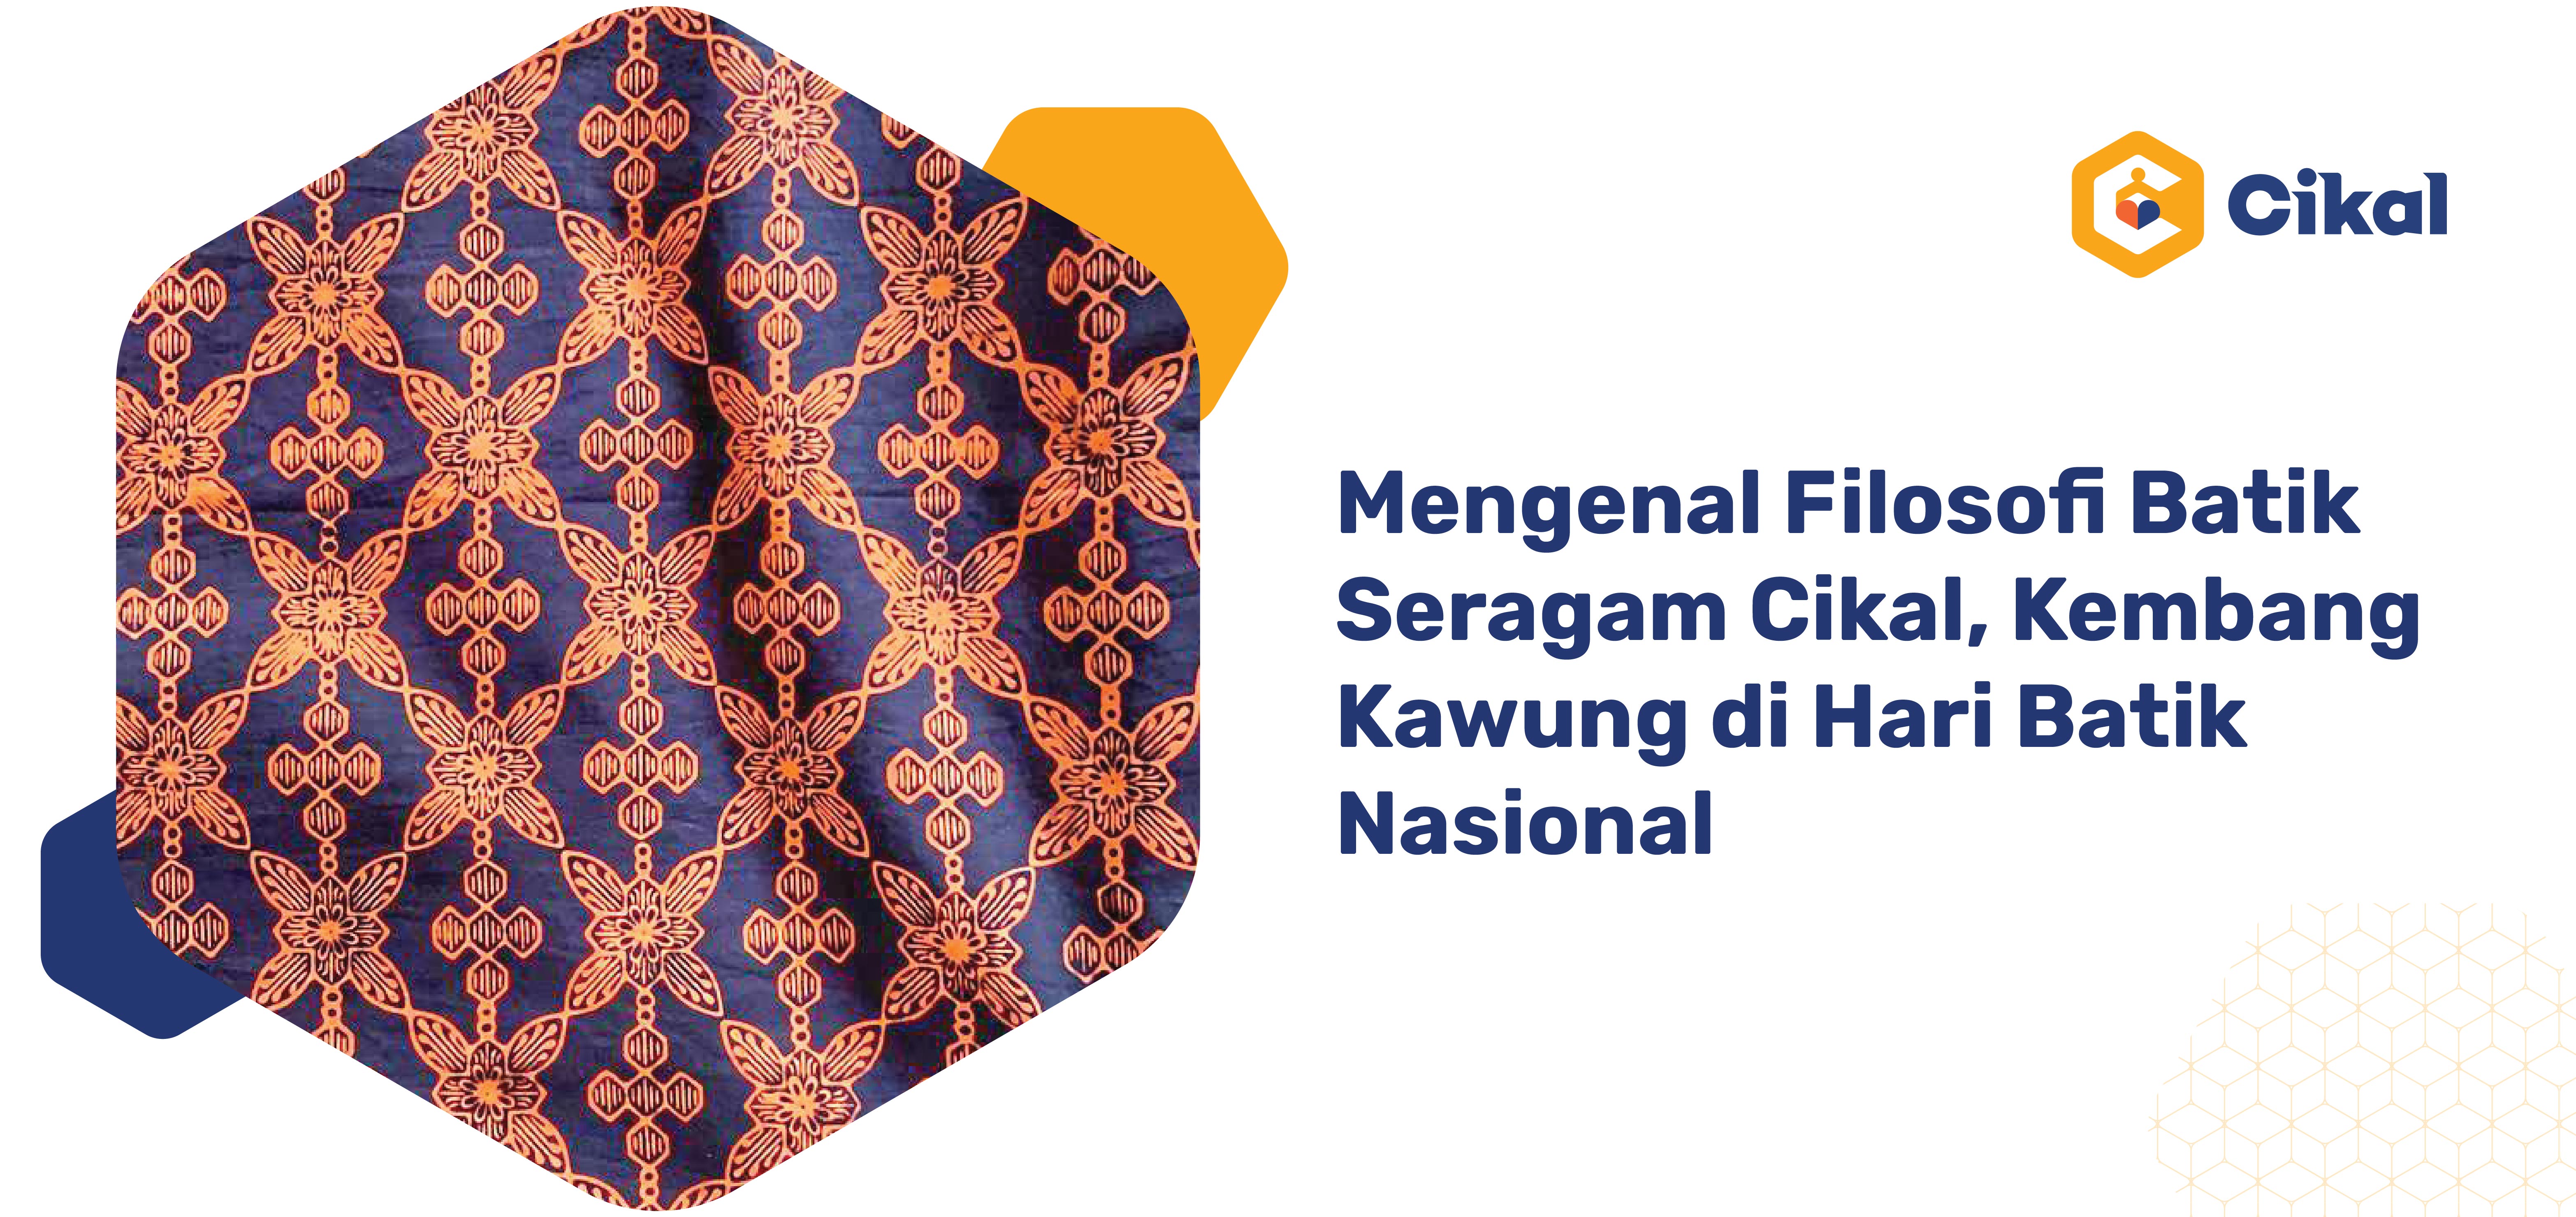 Mengenal Filosofi Batik Seragam Cikal "Kembang Kawung" di Hari Batik Nasional